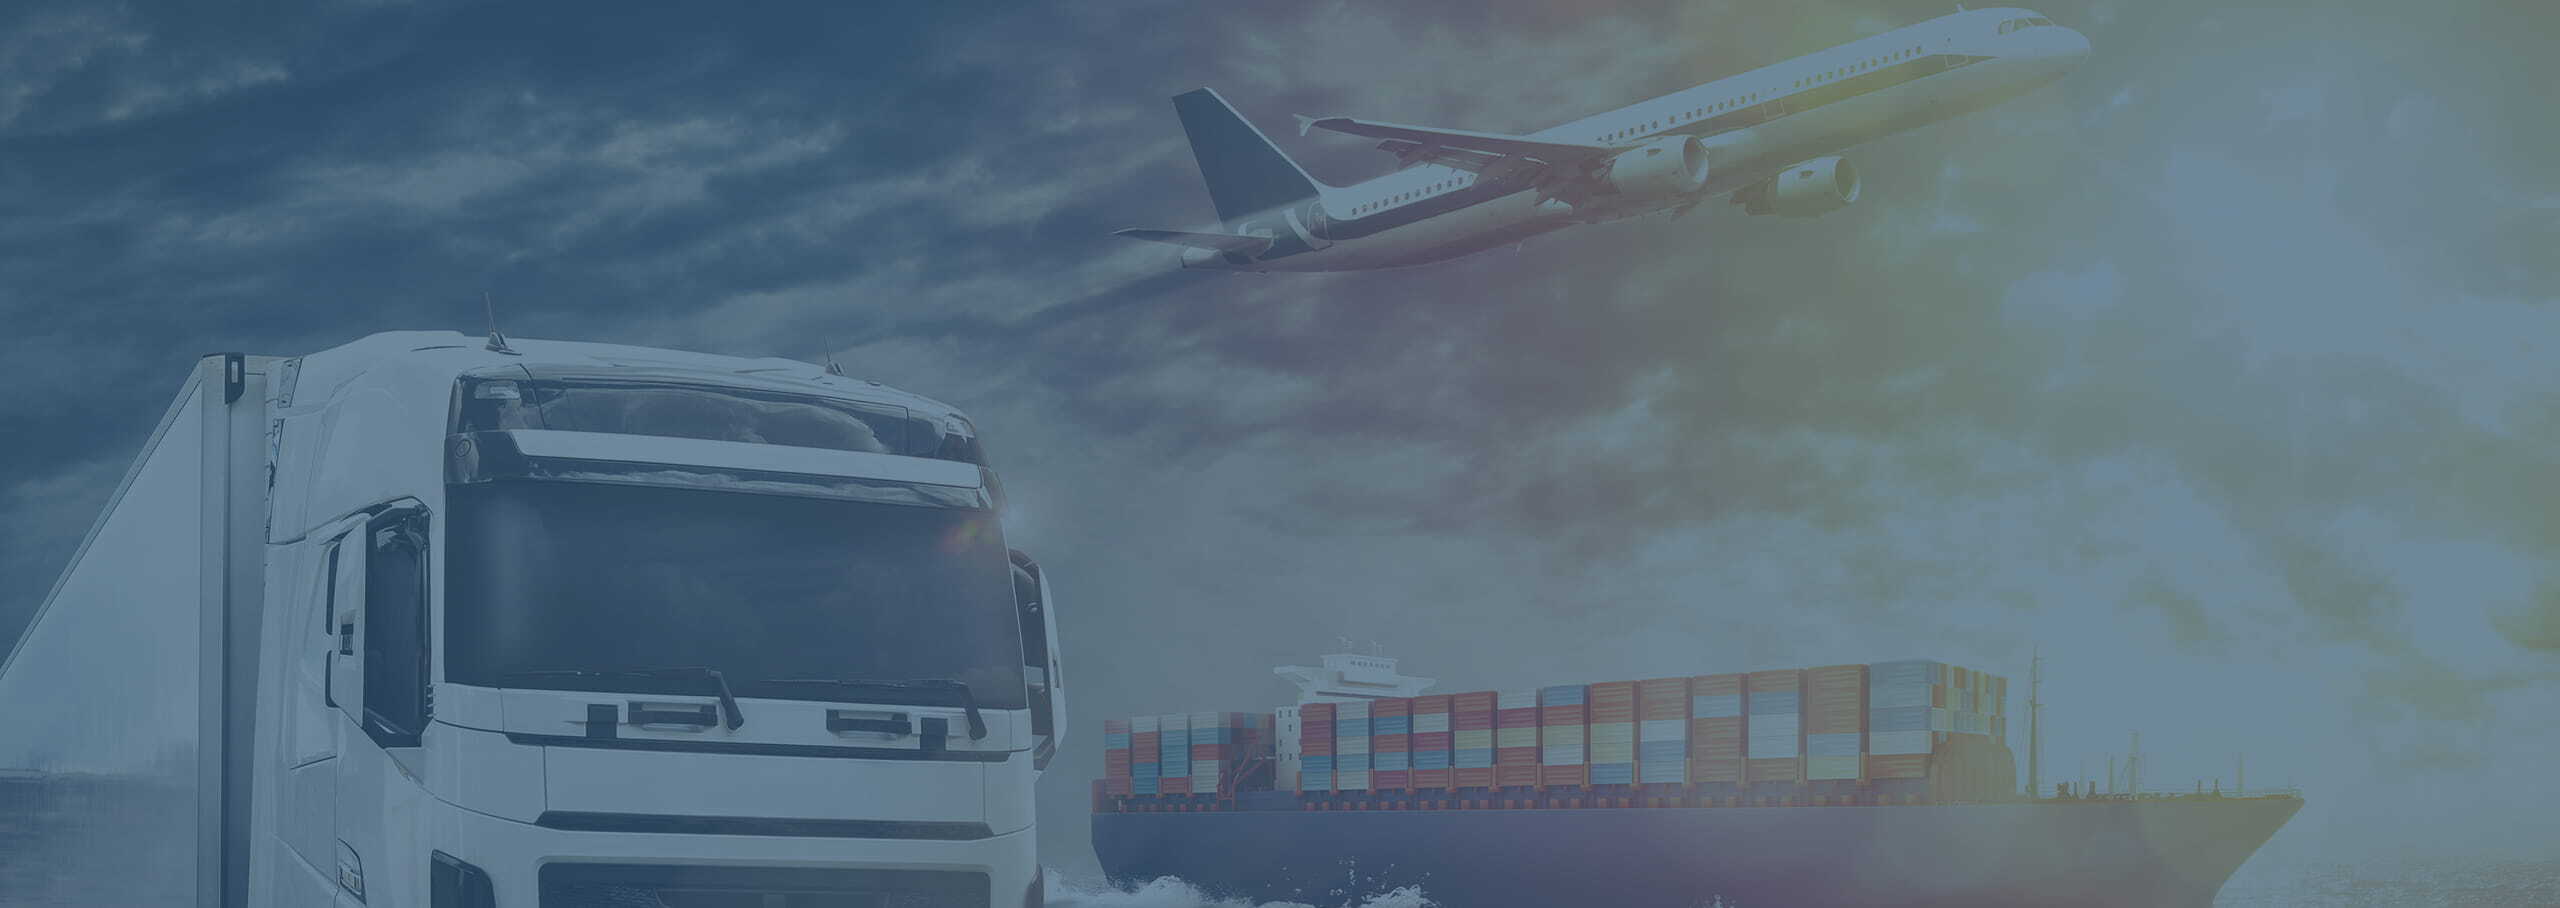 BLT GmbH - International freight forwarding